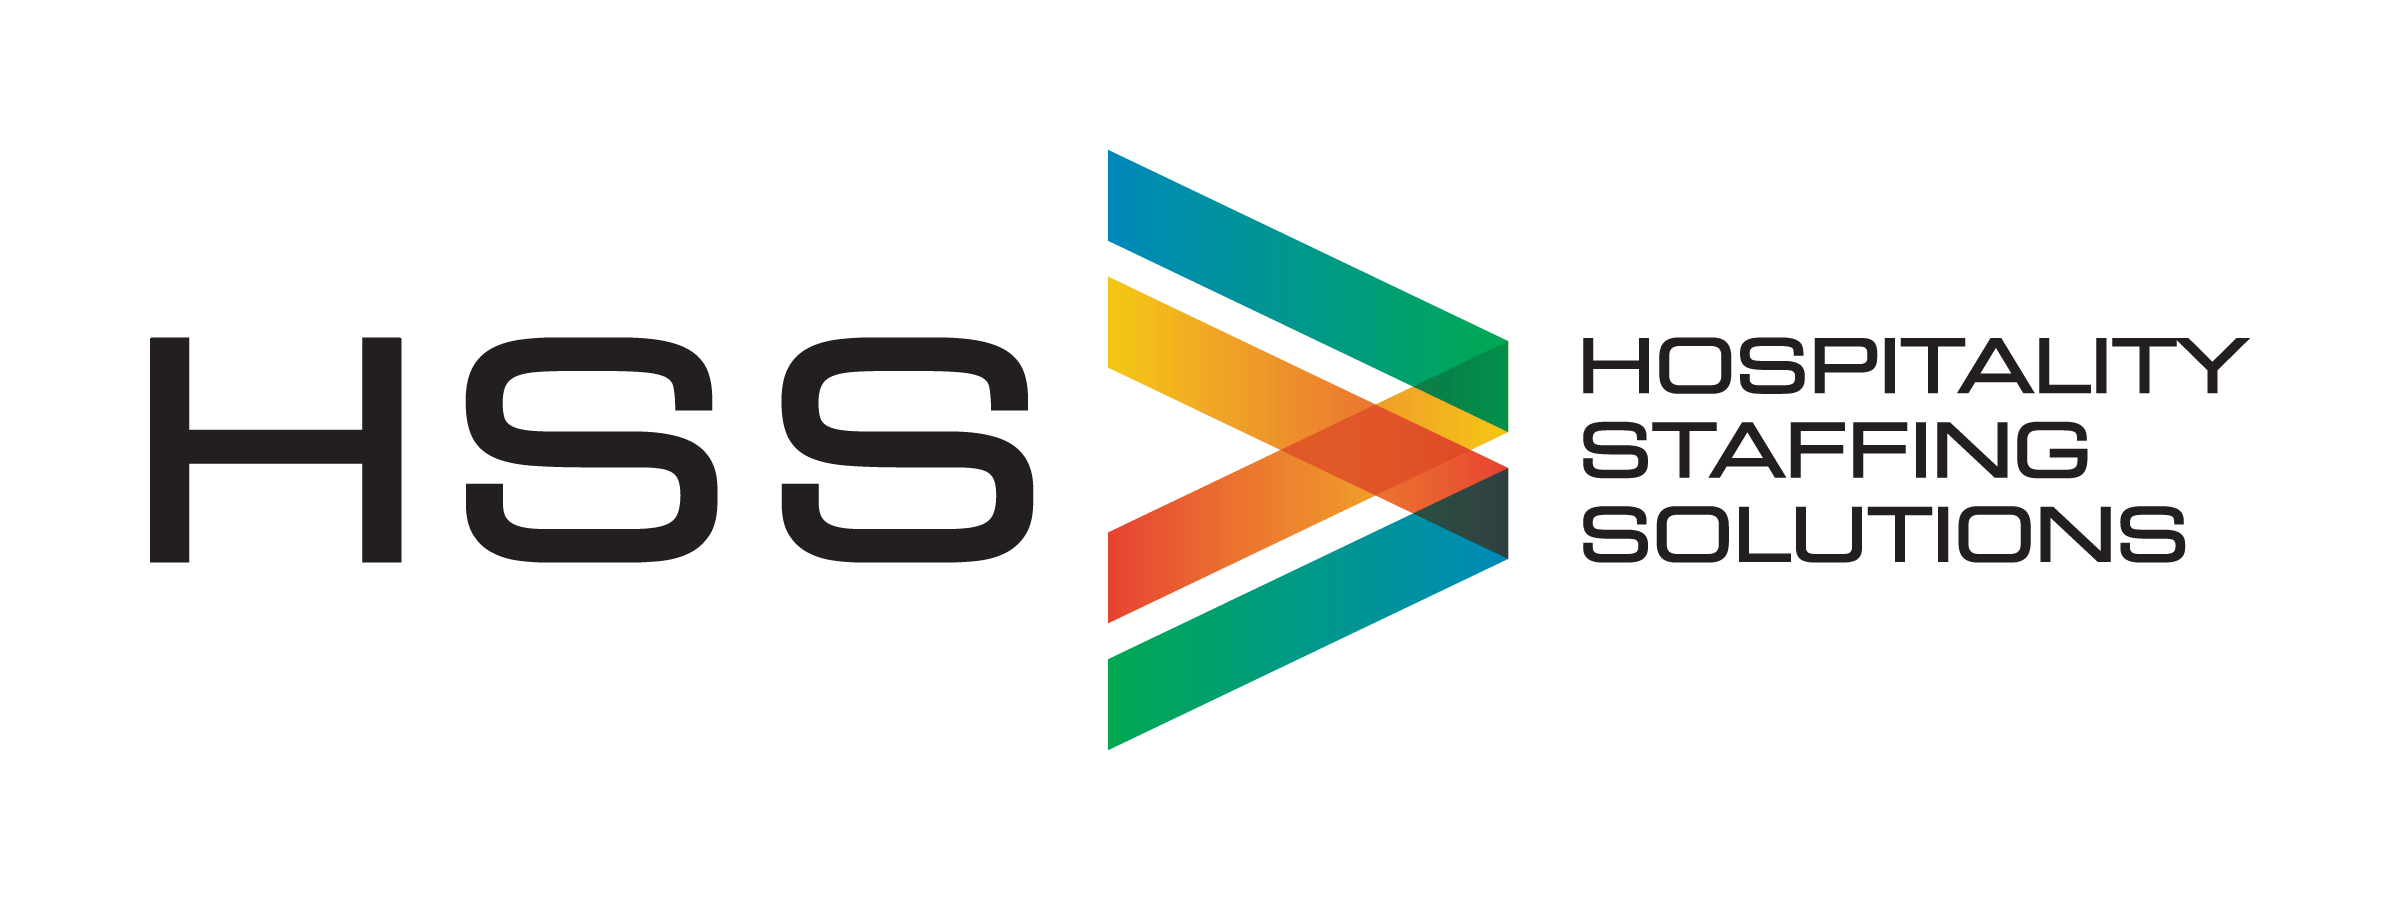 HSS Logo - HSS 2018 Primary Logo Lockup Staffing Solutions